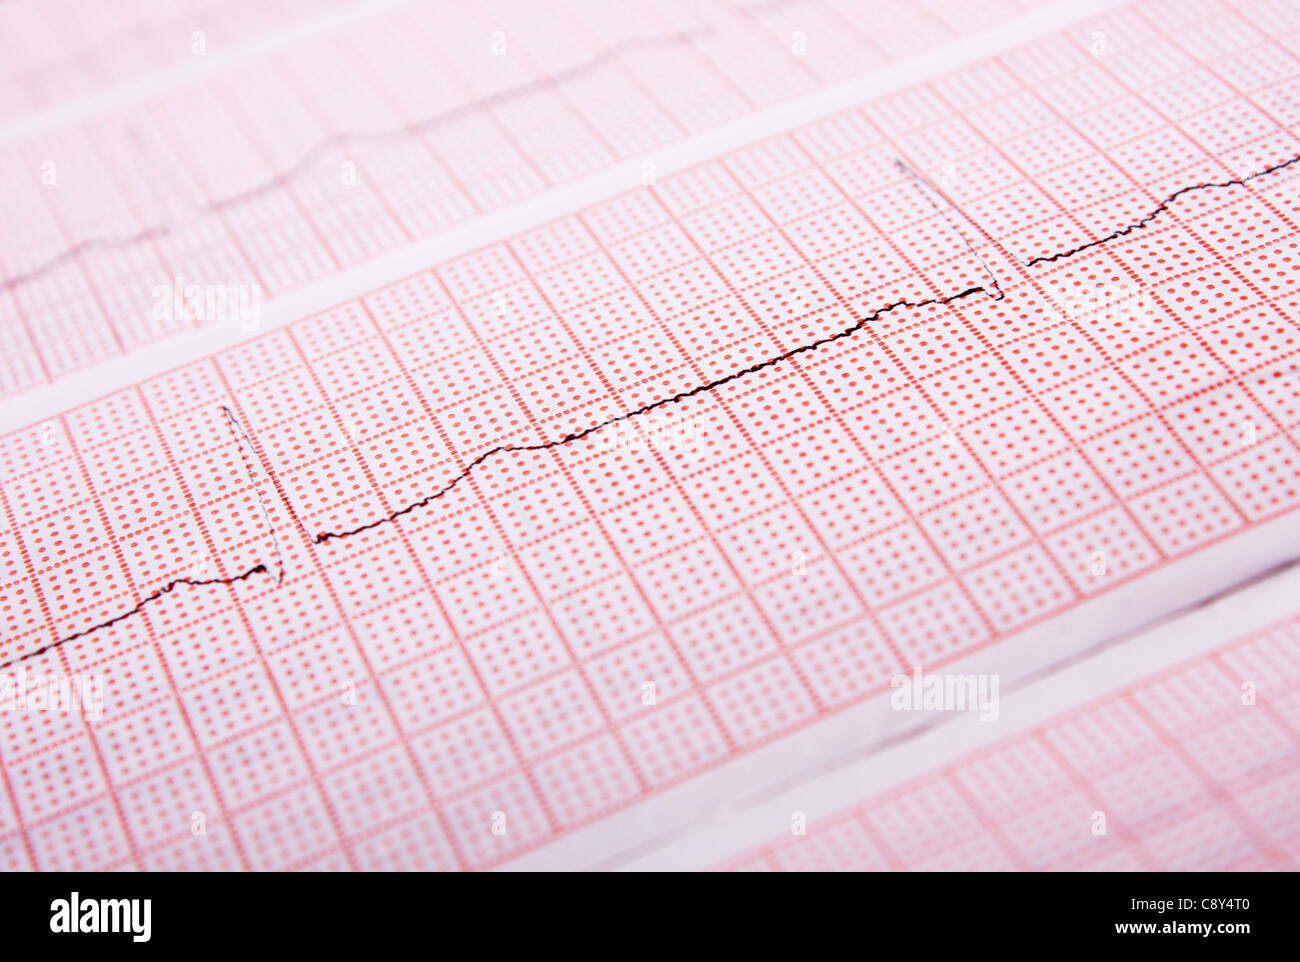 closeup of a heart rate monitor printout Stock Photo